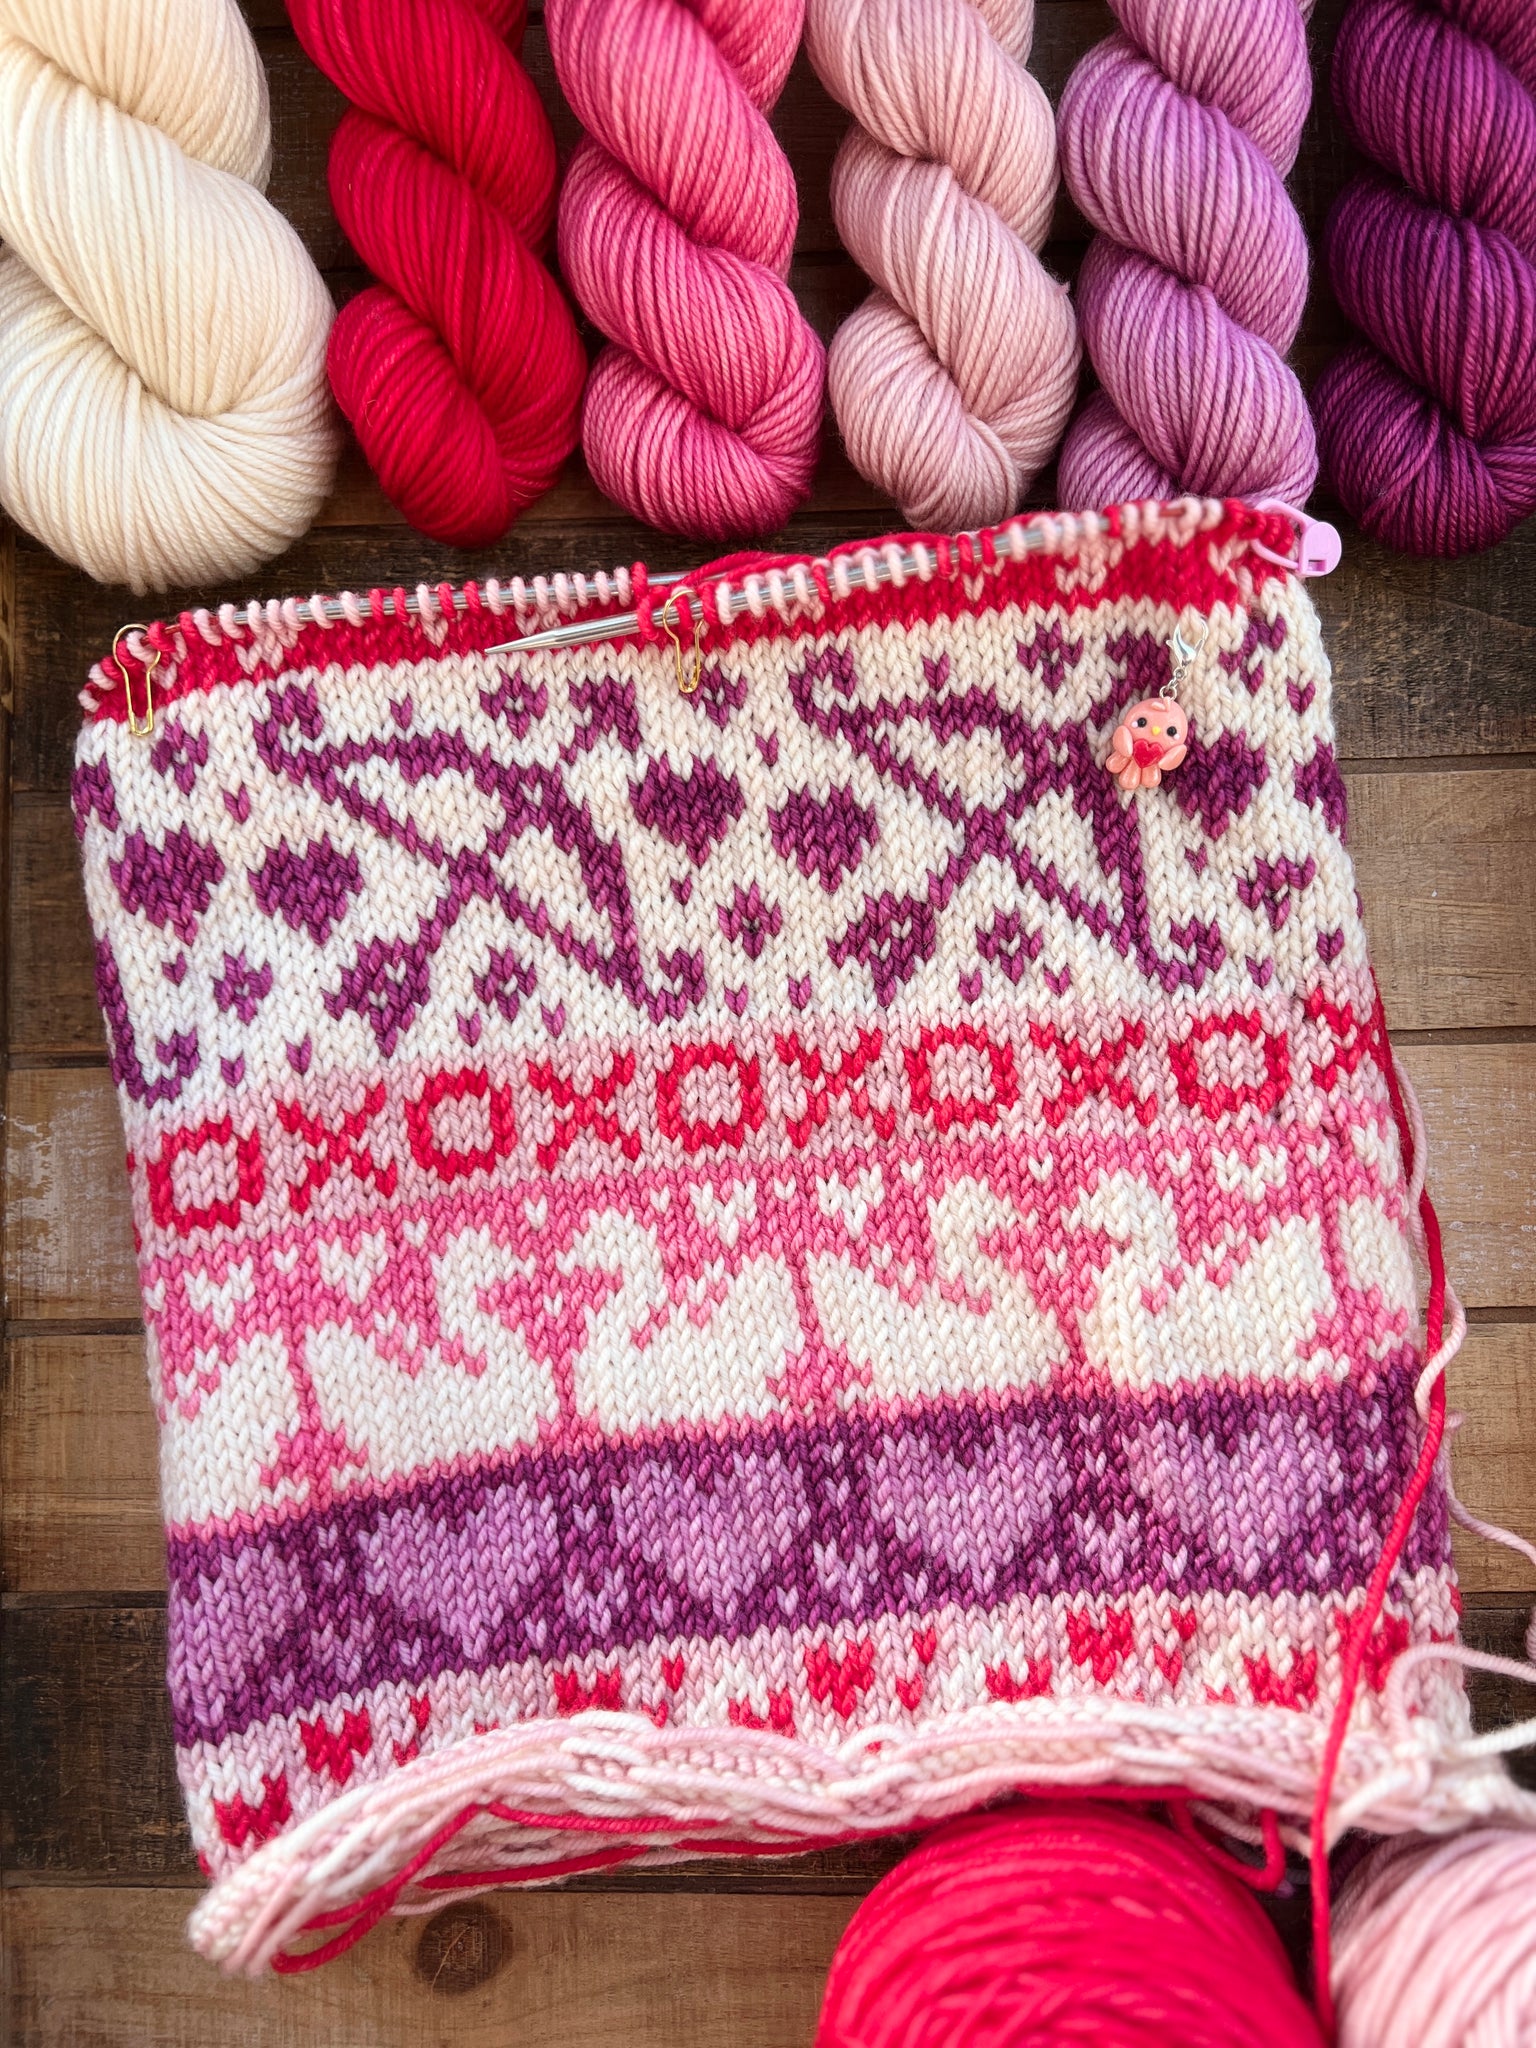 Lovebird Lane Valentine Doodle Cowl Kit- Test Knitters Only Please!